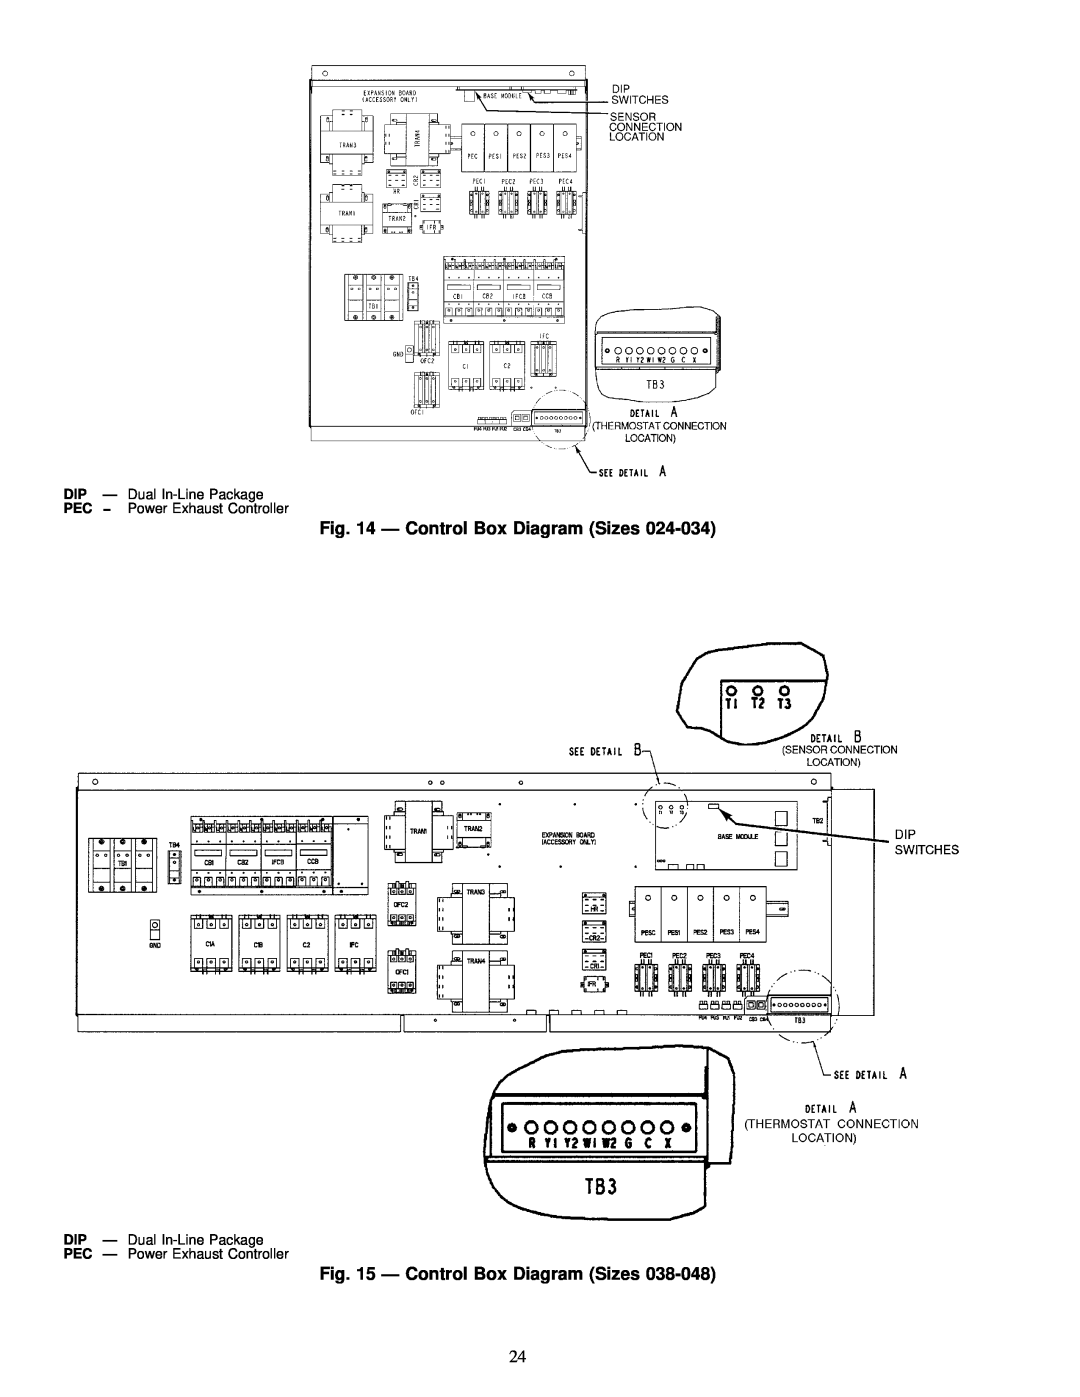 Carrier 50EJ, 50EW, 50EY, 50EK Ð Control Box Diagram Sizes, DIP Ð Dual In-LinePackage, PEC − Power Exhaust Controller 